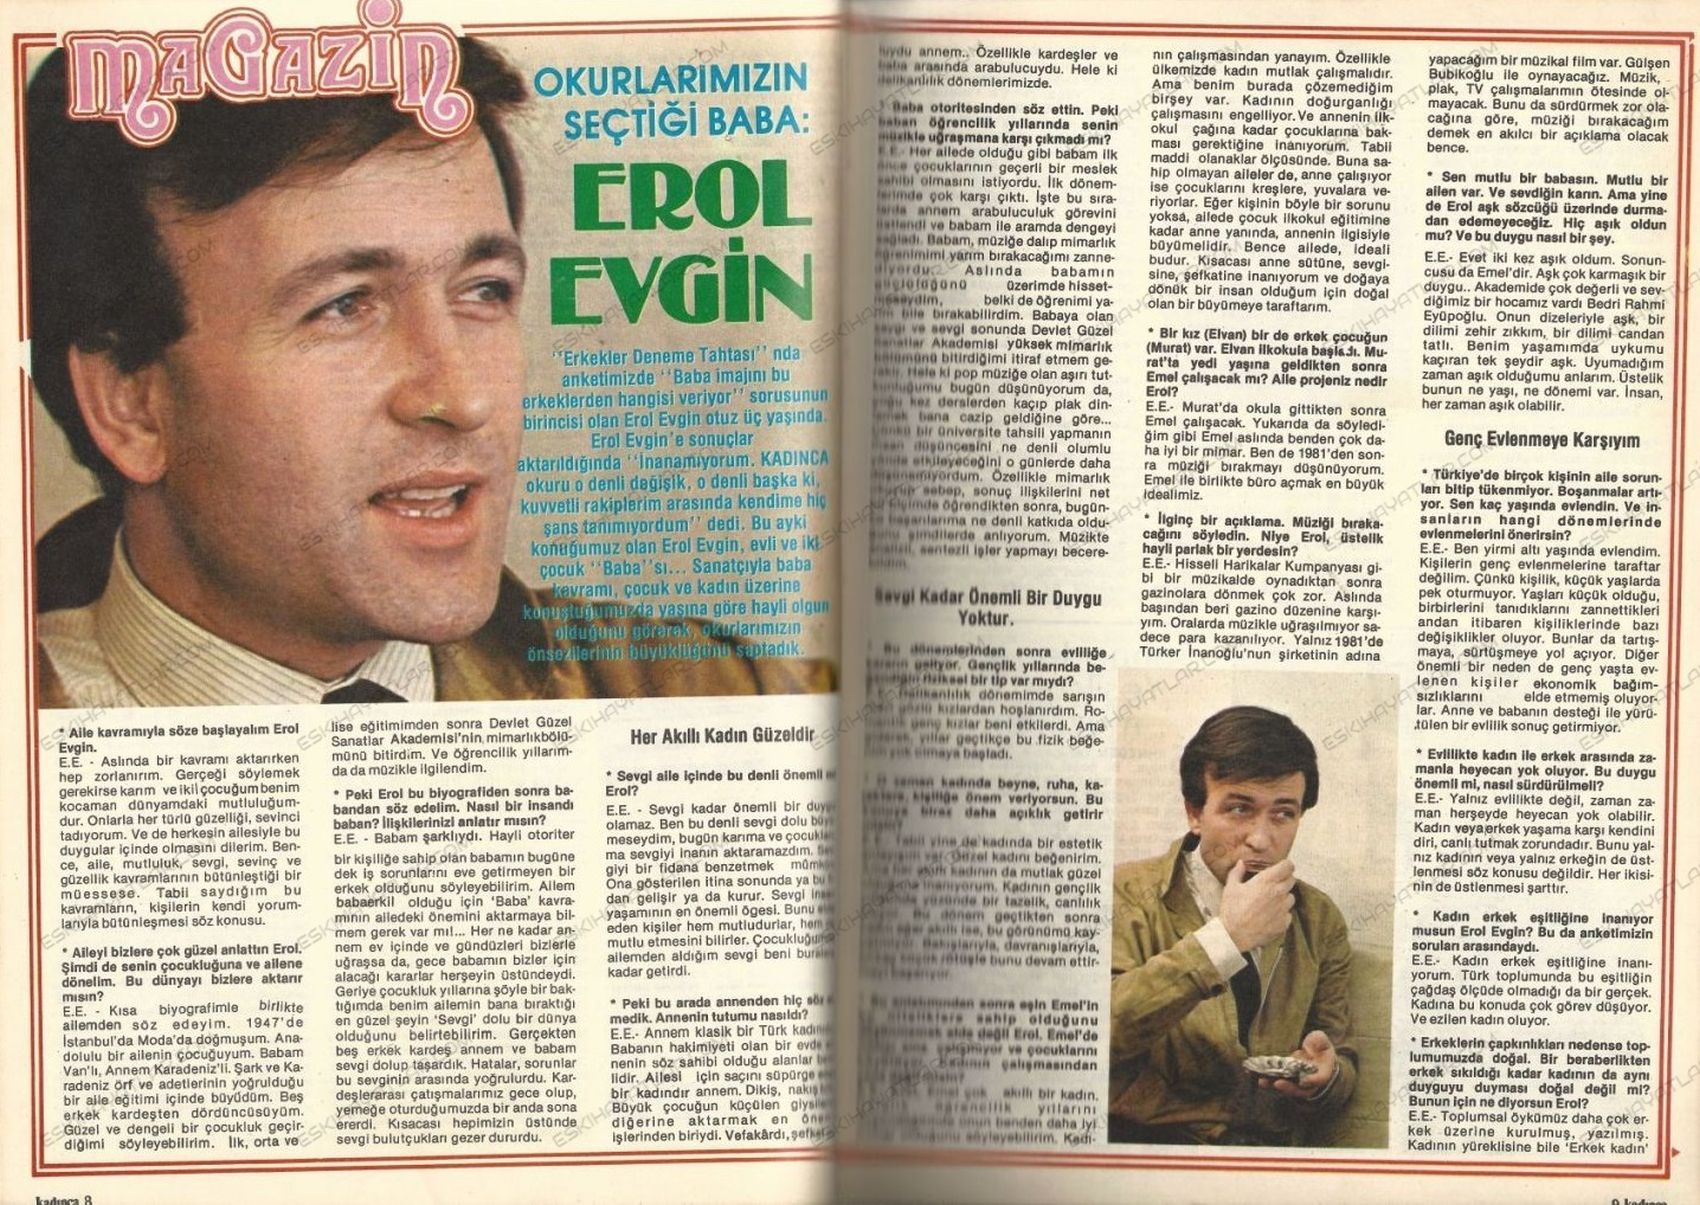 0209-erol-evgin-roportaji-1981-kadinca-dergisi (1)